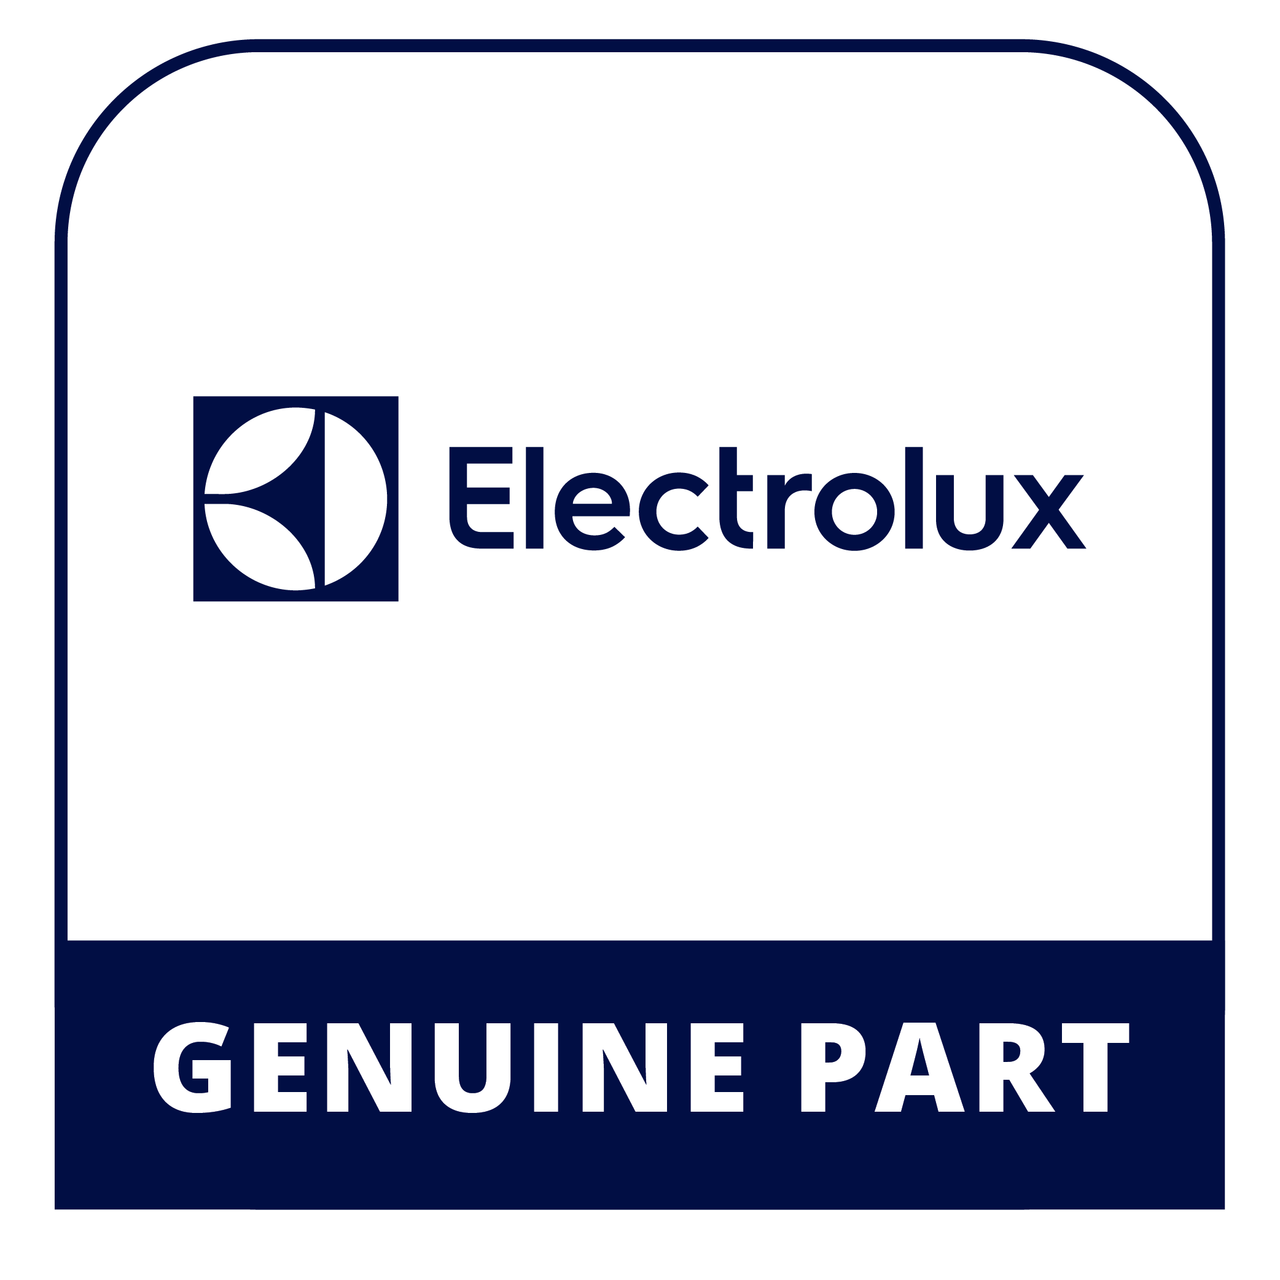 Frigidaire - Electrolux 154743103 Handle Assembly - Genuine Electrolux Part